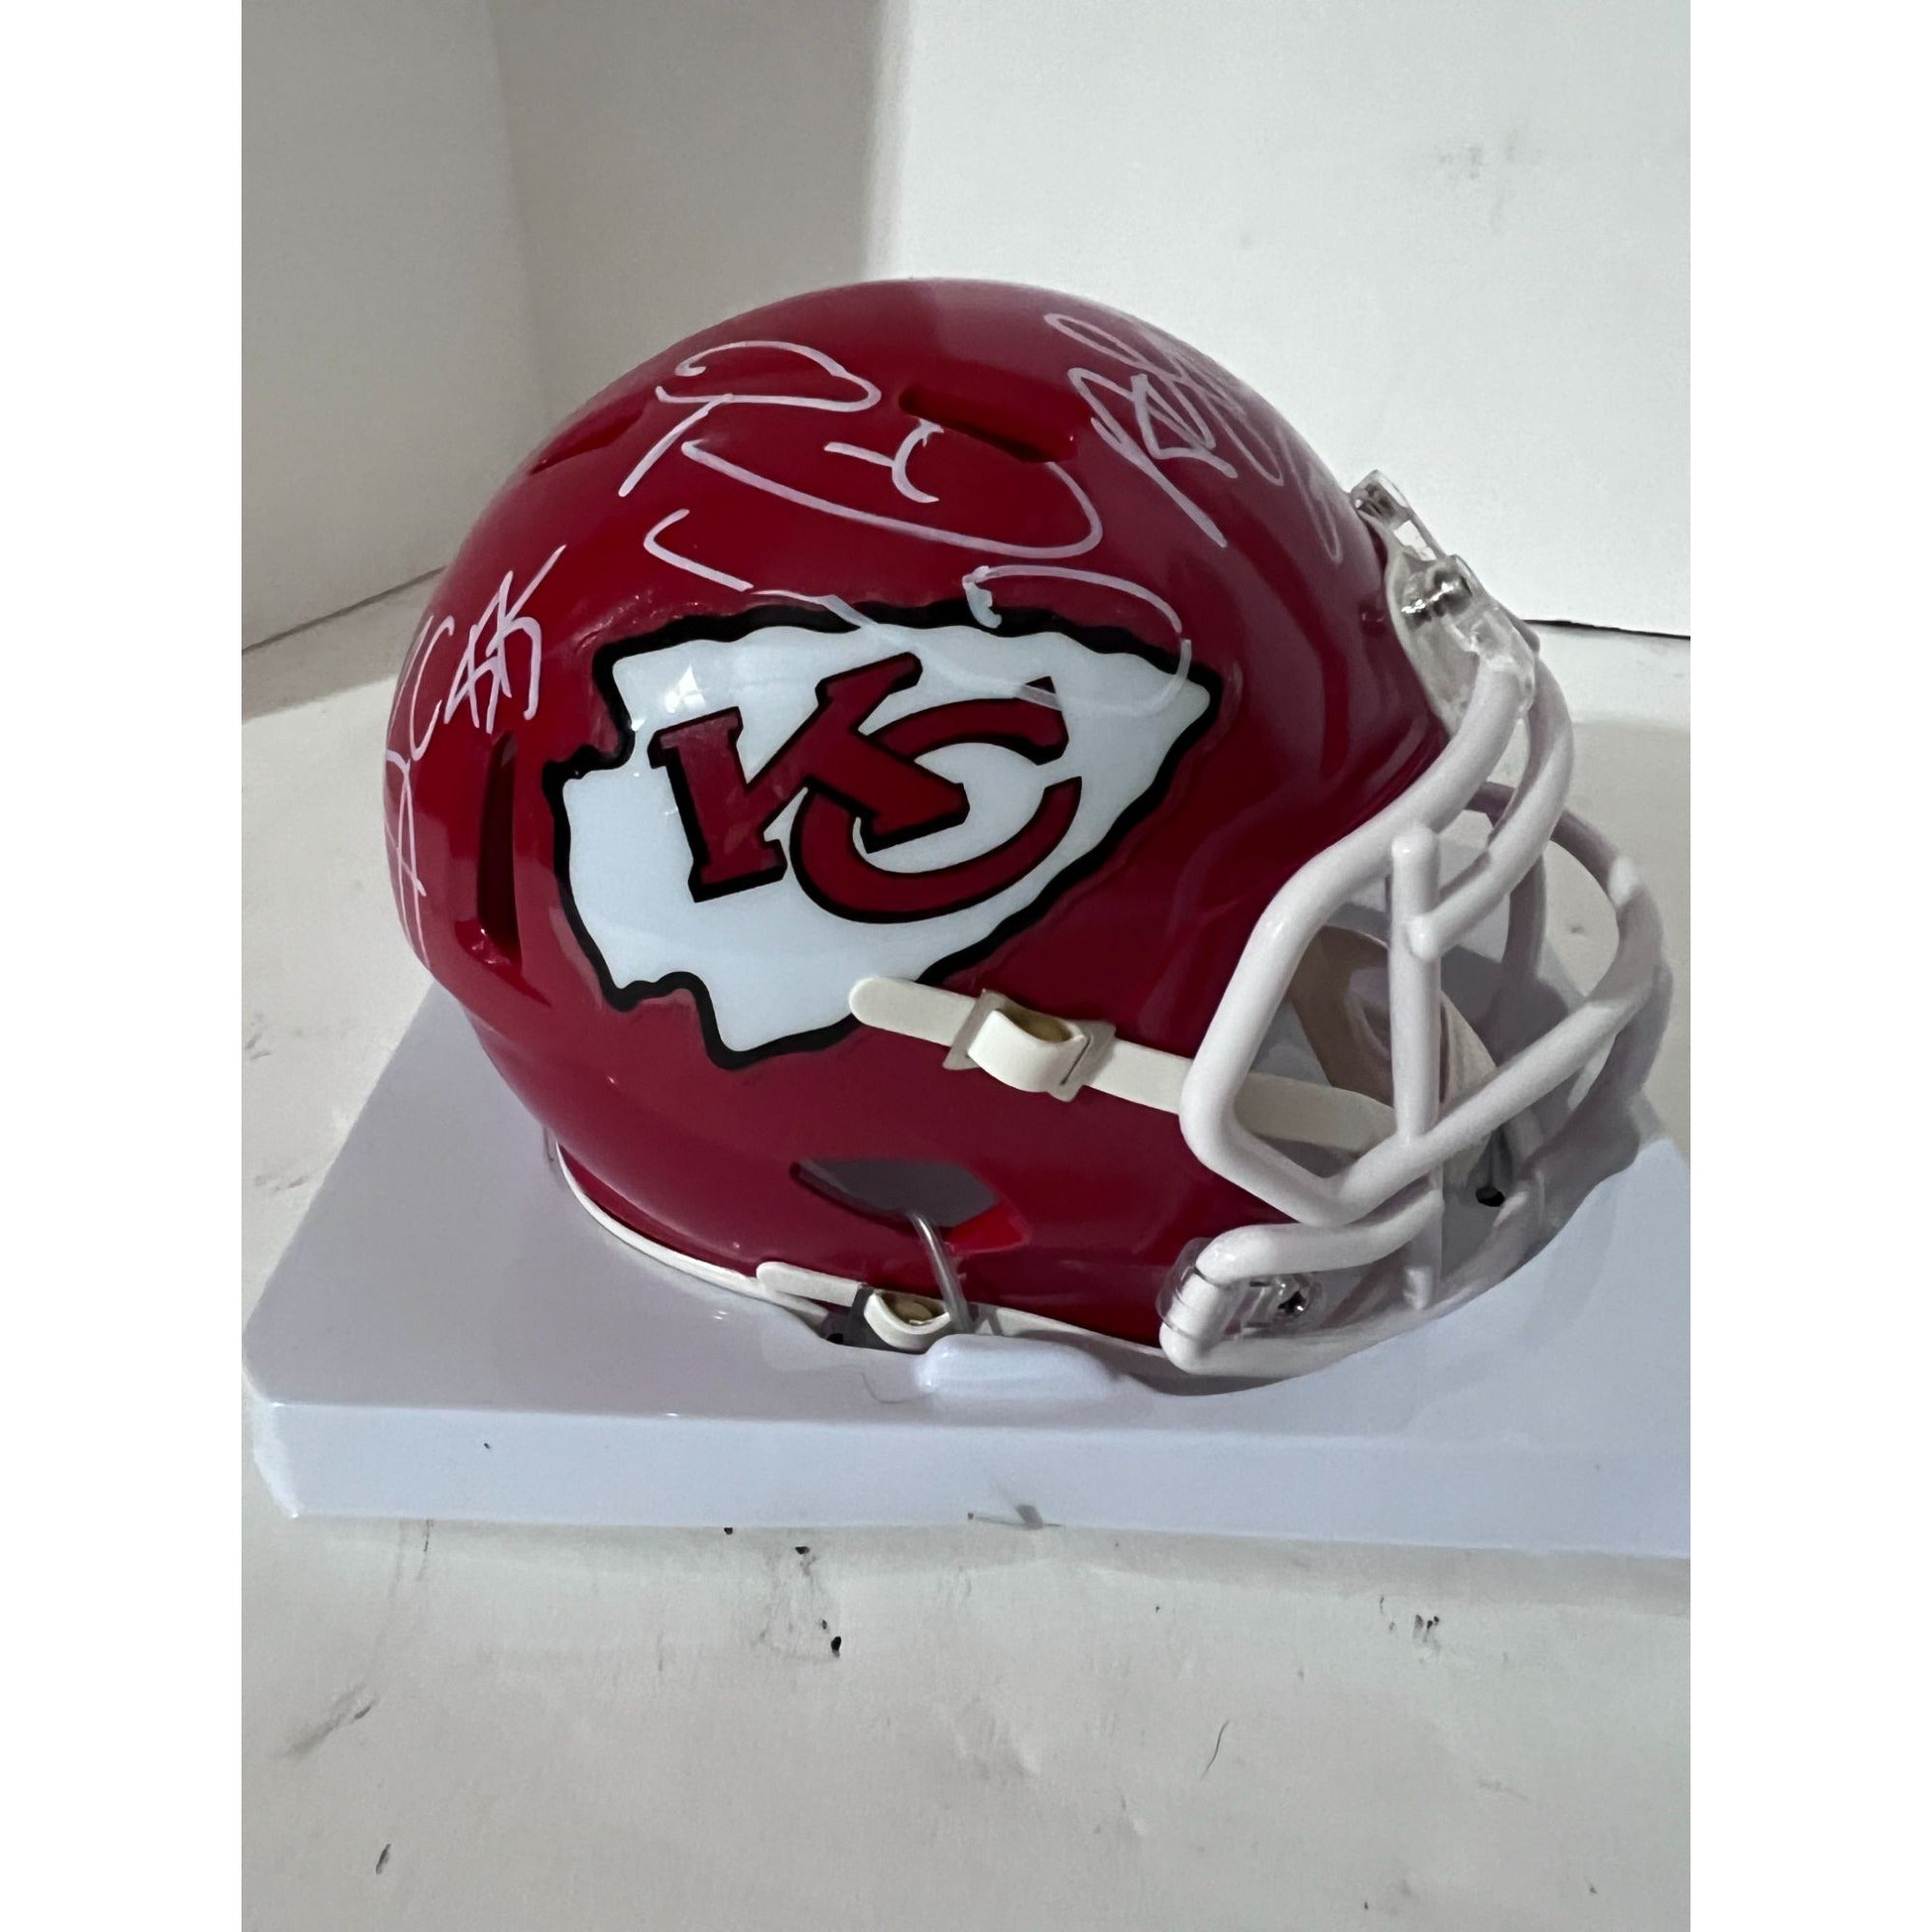 Kansas City Chiefs Patrick Mahomes Andy Reid Travis Kelce mini helmet signed with proof